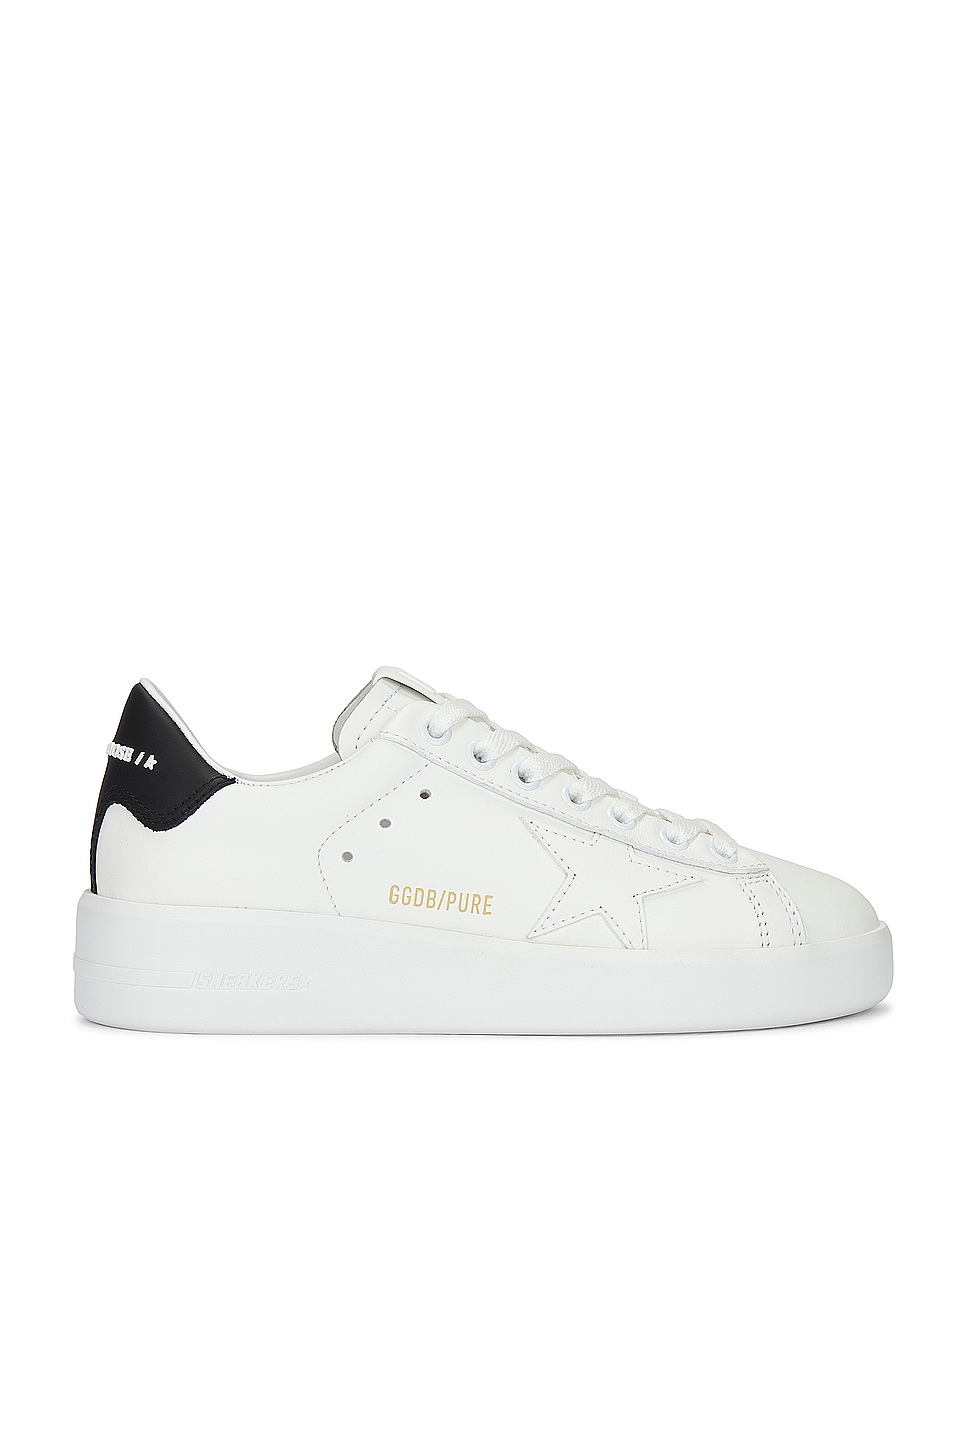 Image 1 of Golden Goose Pure Star Sneaker in White & Black